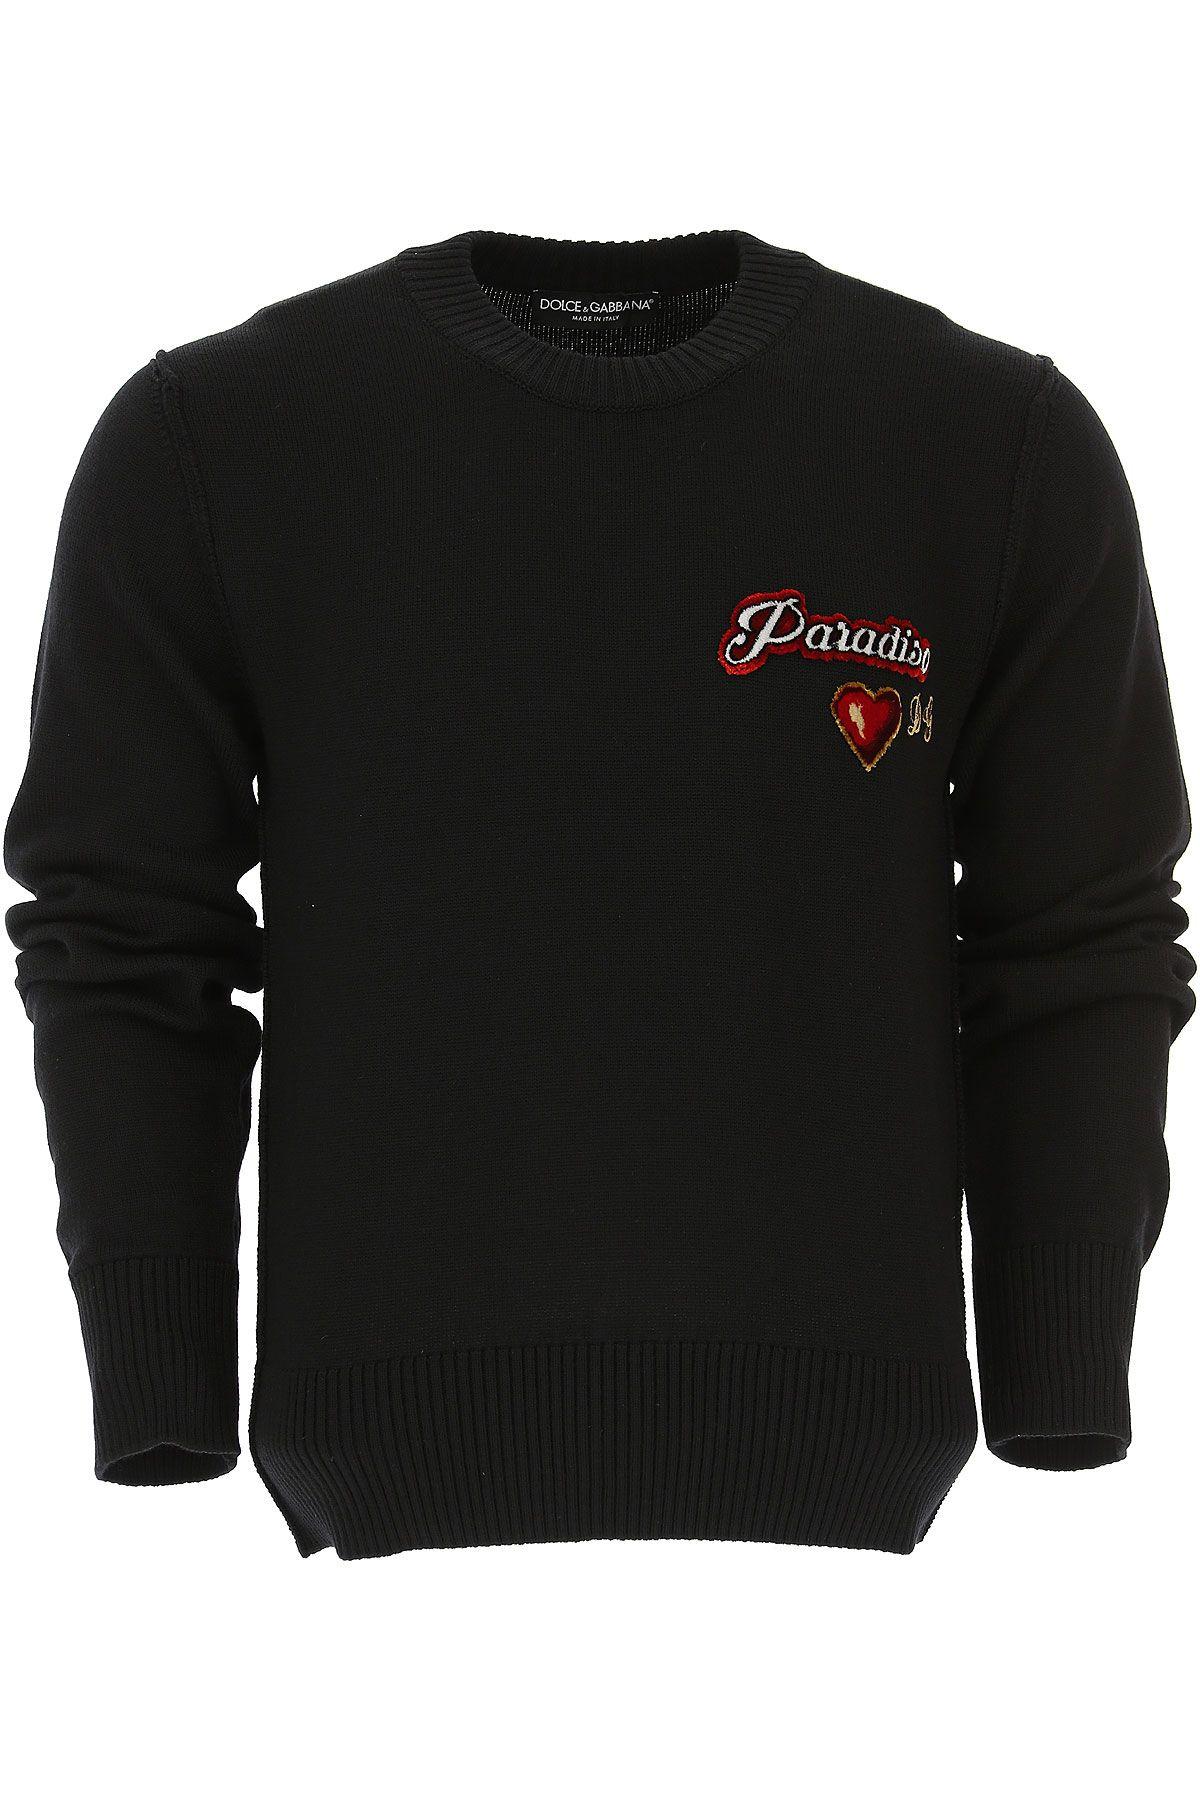 Red White Heart Logo - Dolce & Gabbana Clothing For Men Fall 2018 19 Black•Other